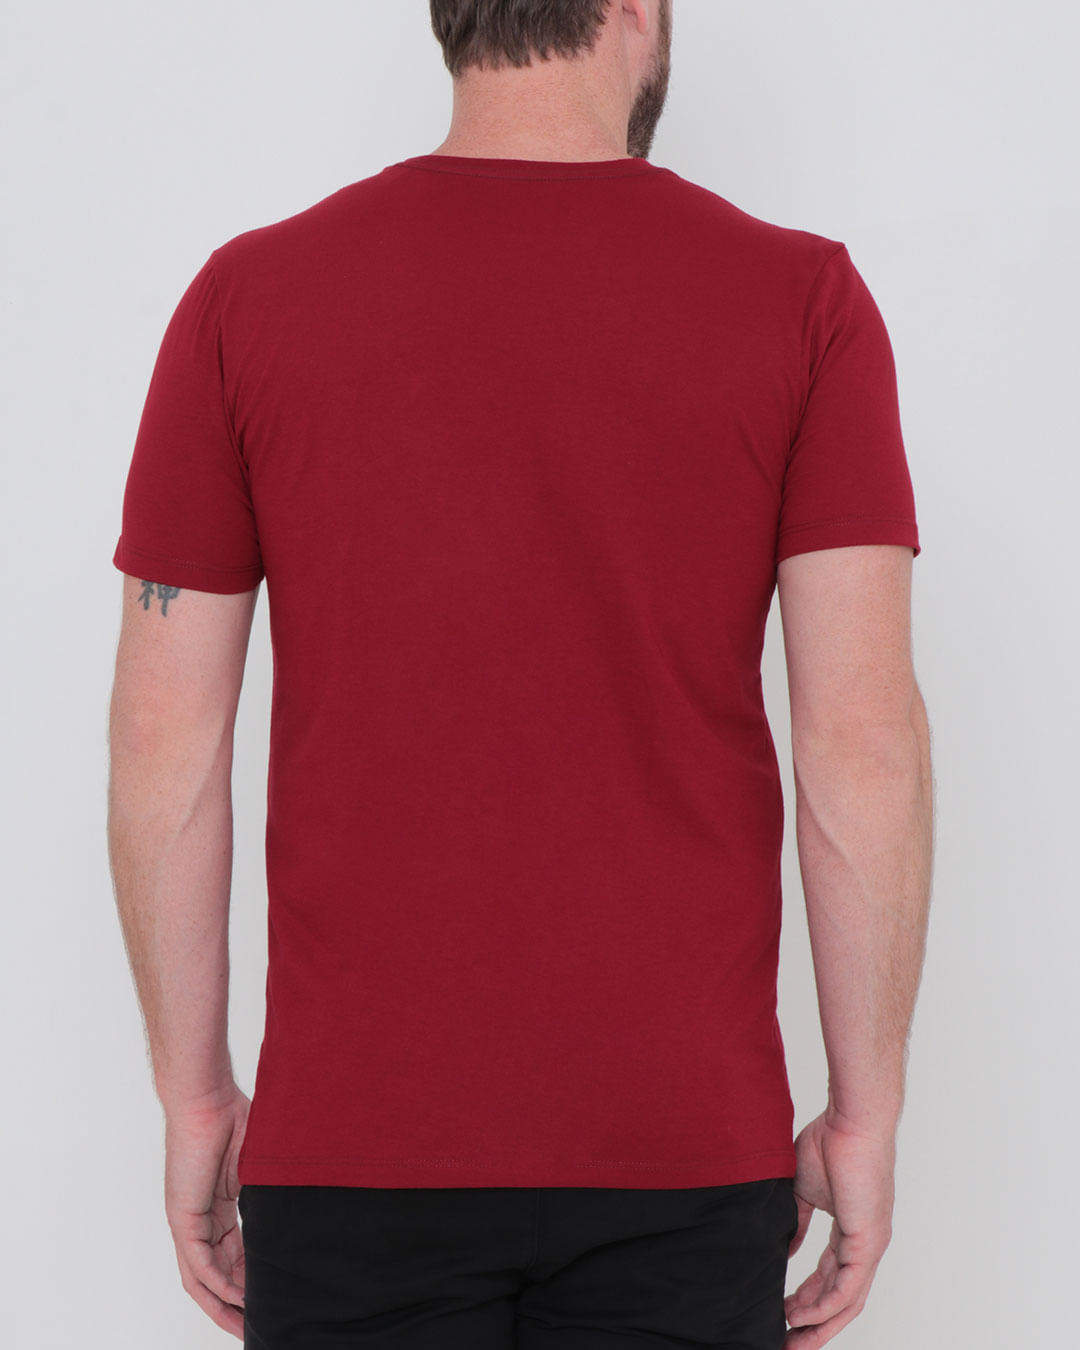 Camiseta-Estampa-Frontal-Vermelha